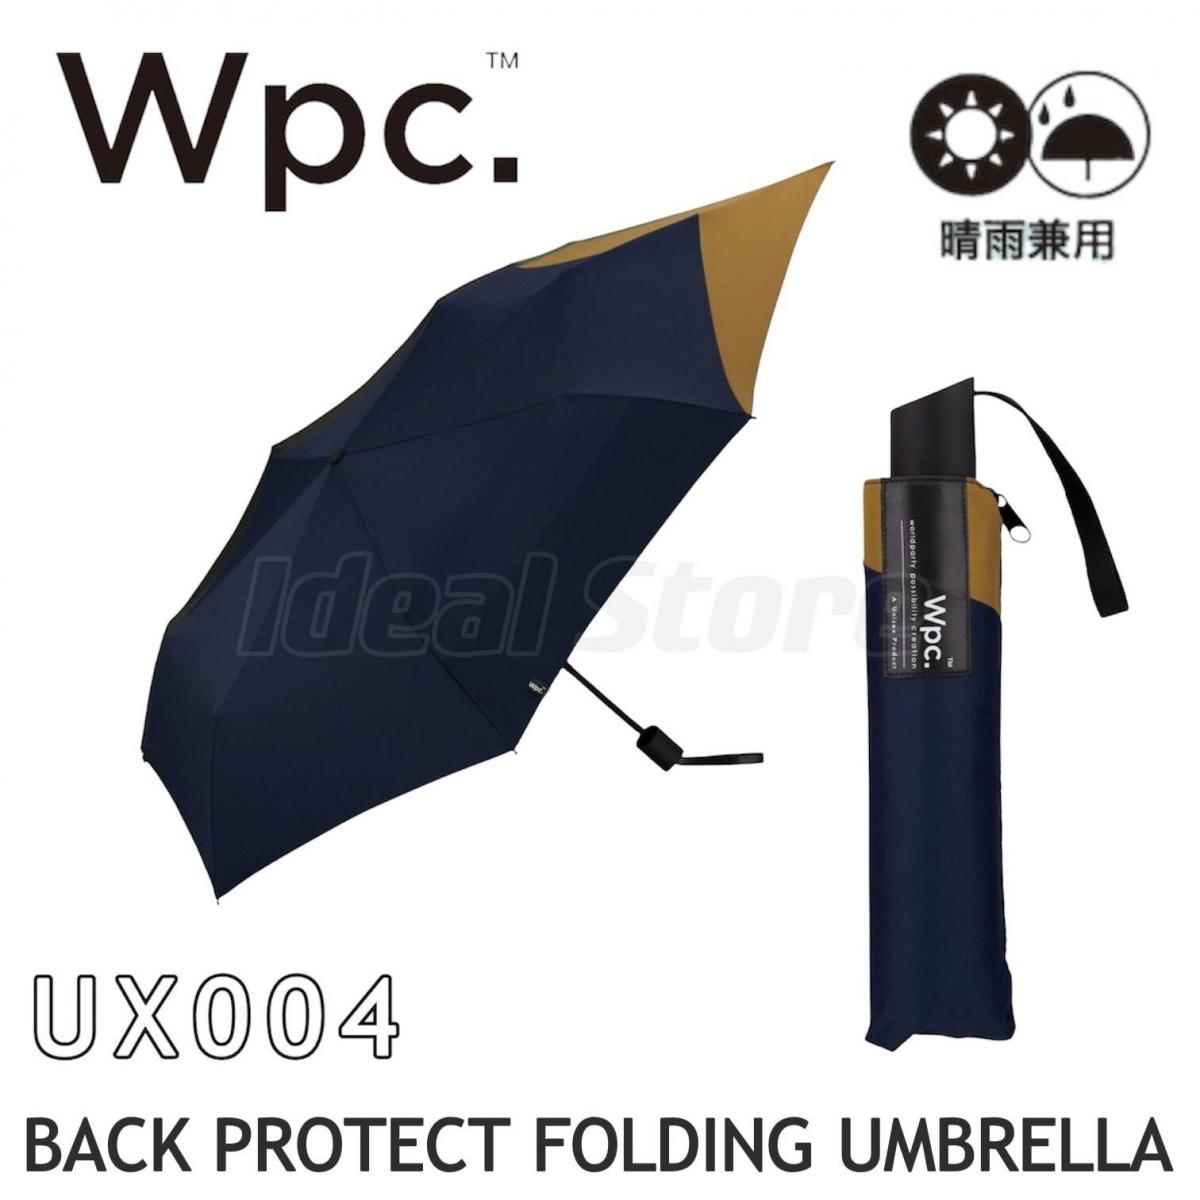 WPC - 2022 UNISEX Umbrella Back Extended Folding Umbrella UX004｜WPC｜Can be used in rain or shine｜Retractable Umbrella｜Anti-UV｜Anti-UV｜Sunscreen｜Twin Umbrella - Navy Blue/Camel